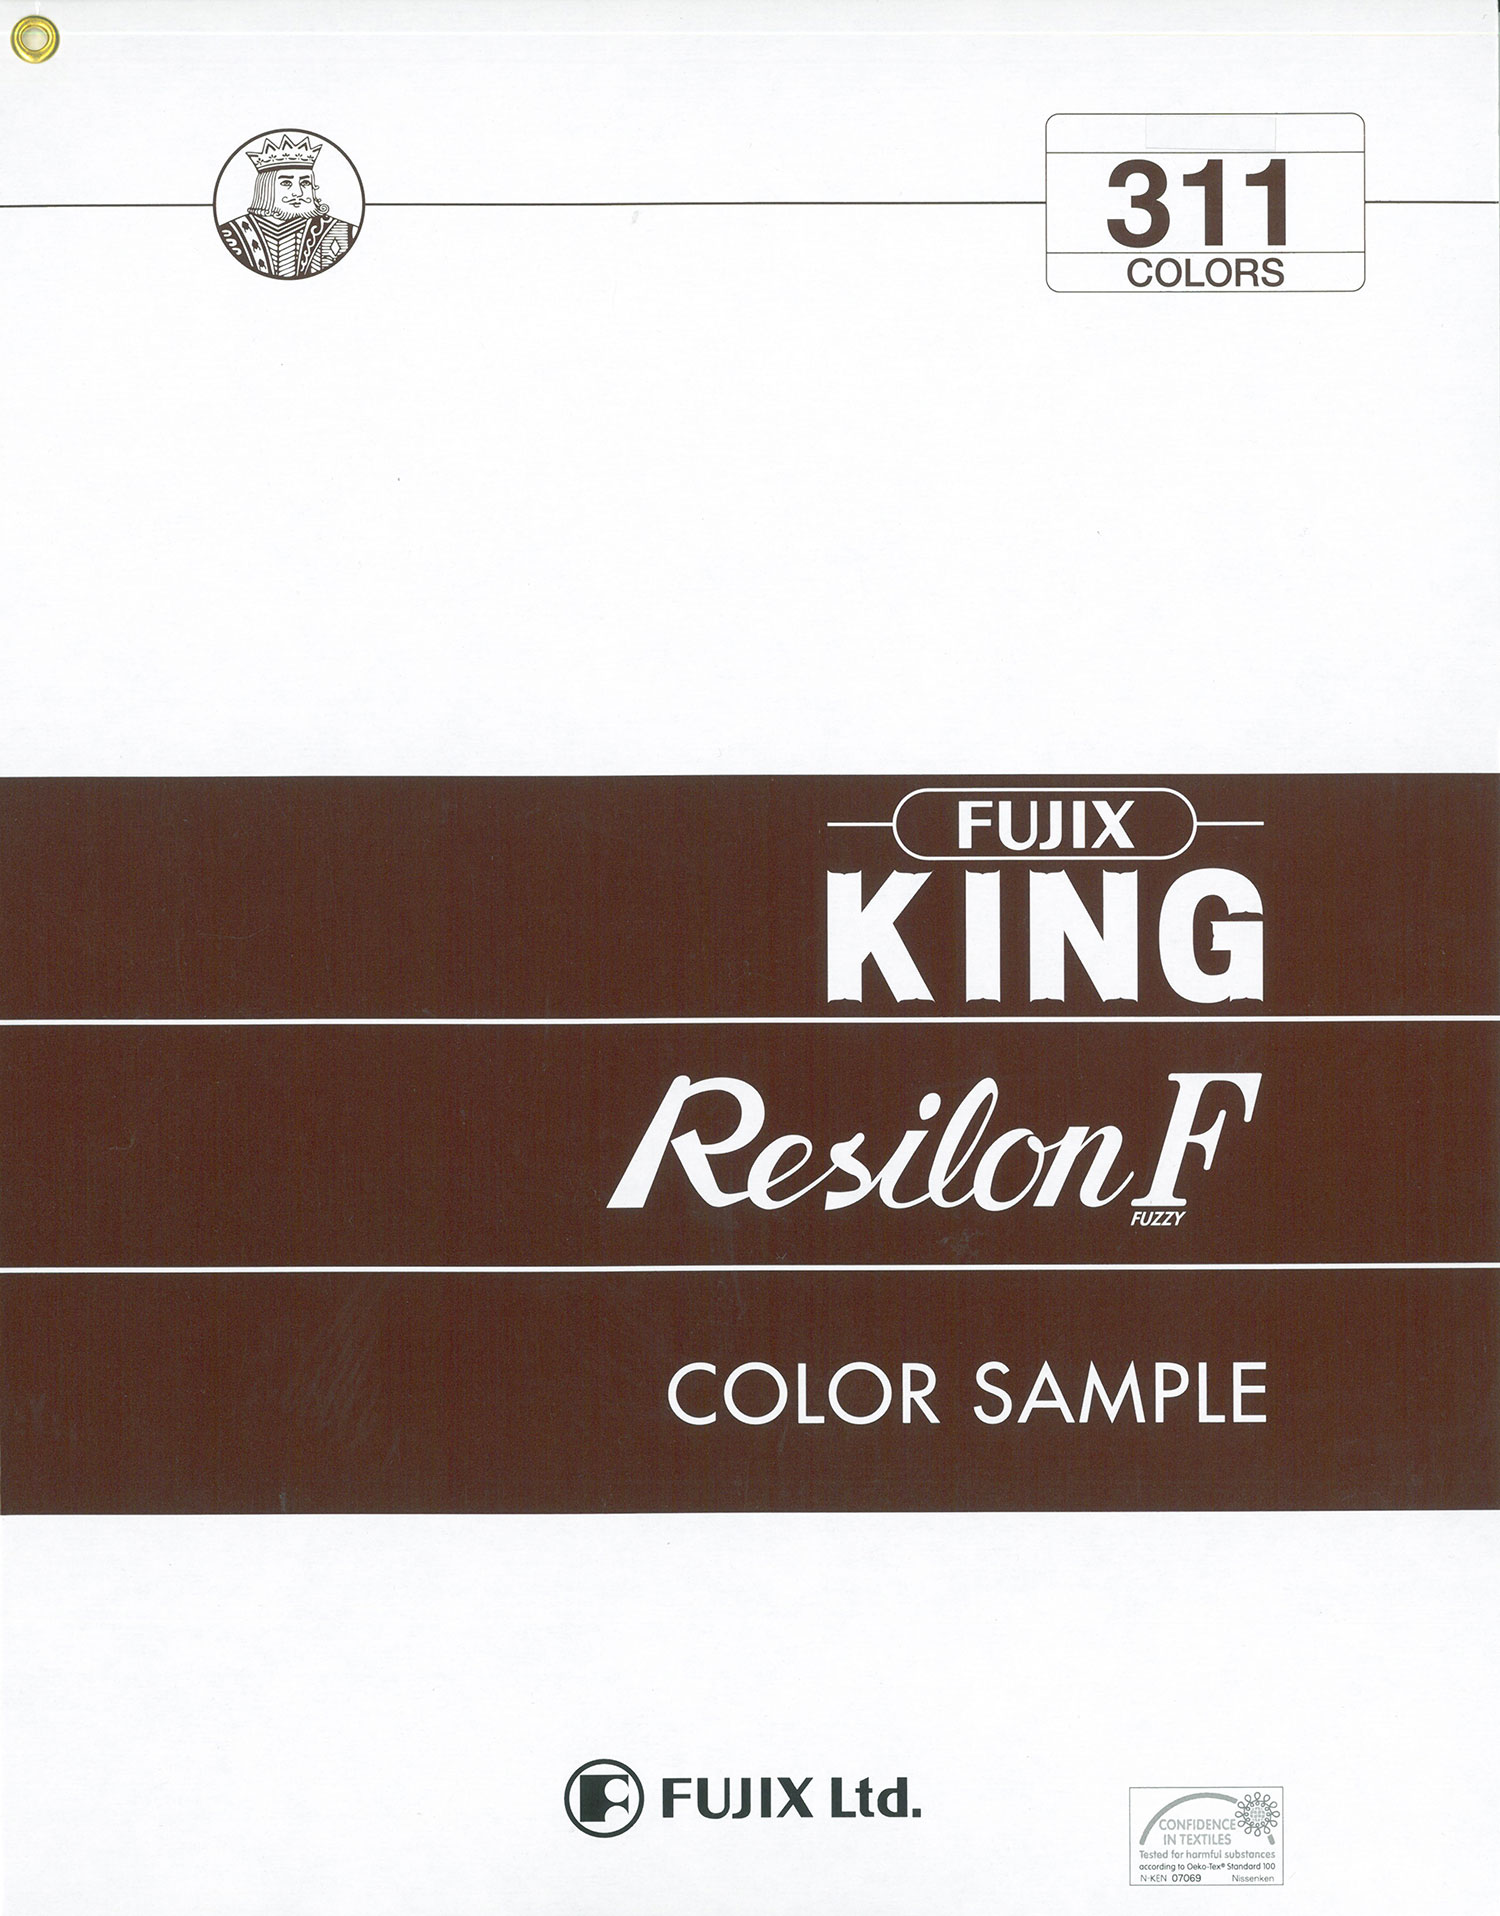 FUJIX-SAMPLE-7 KING Resilon FUZZY[样卡] FUJIX